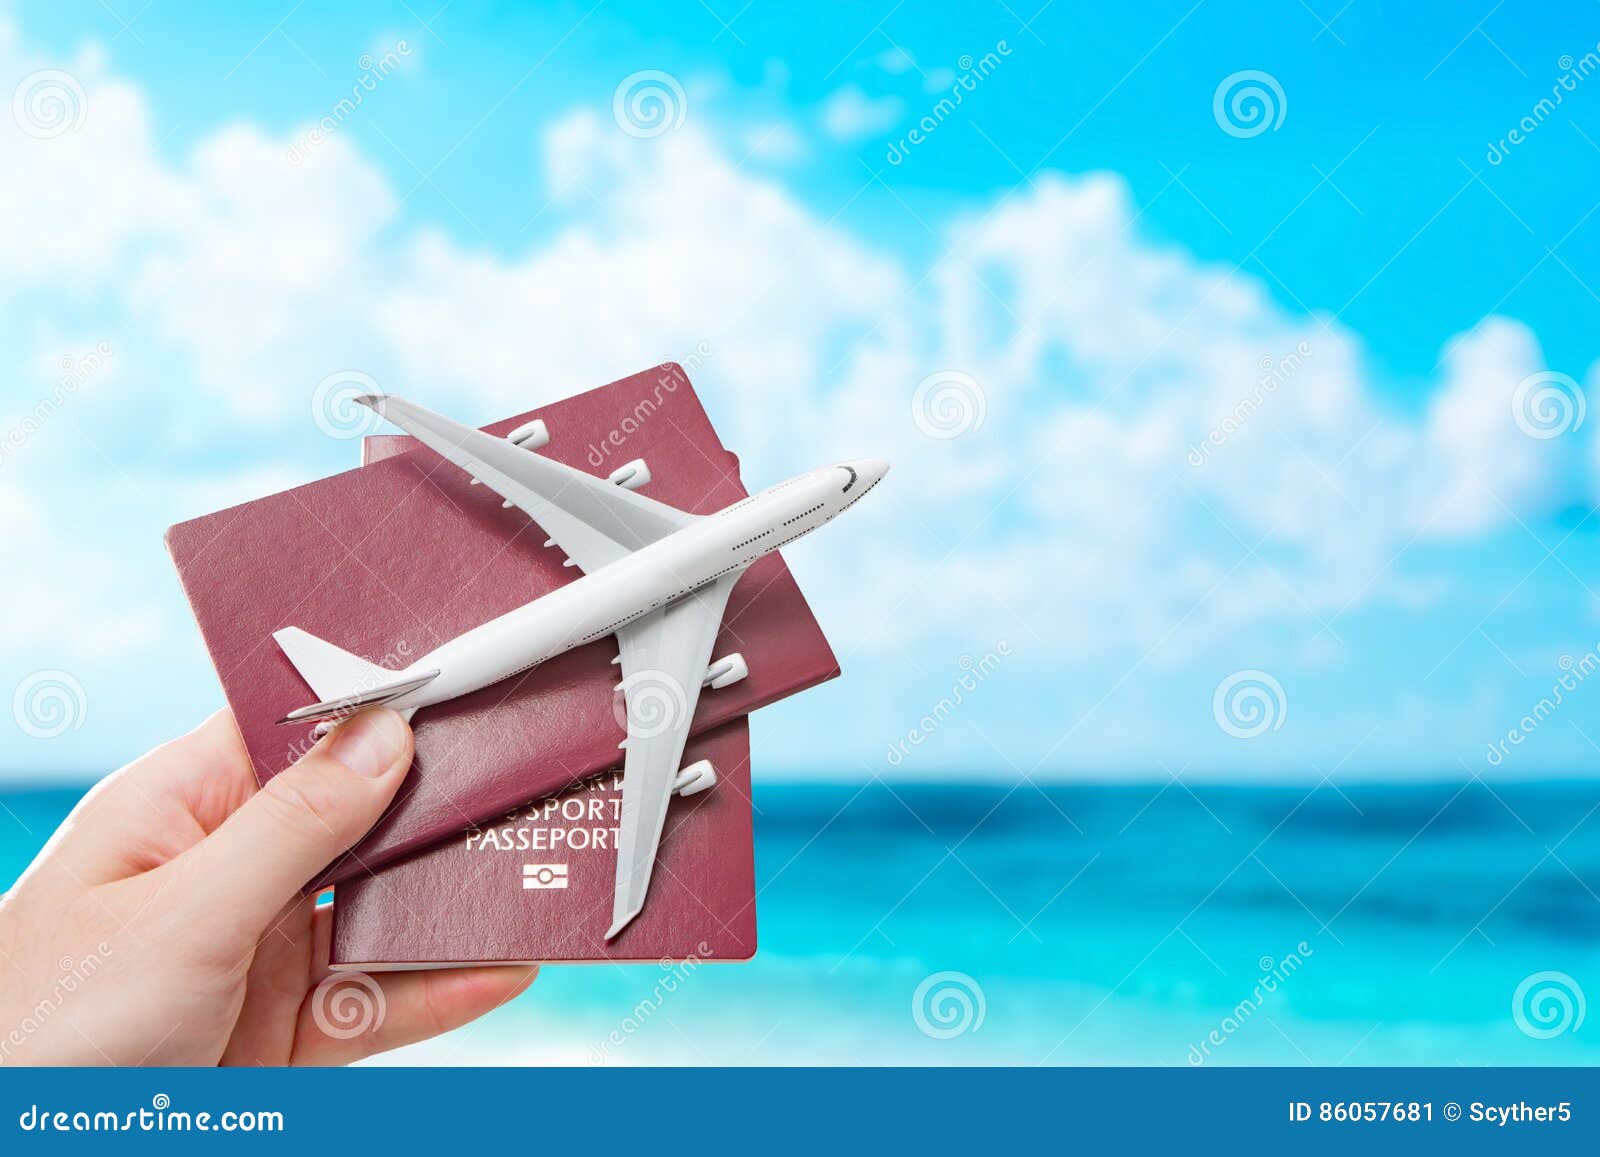 passport flight fly travelling travel citizenship concept